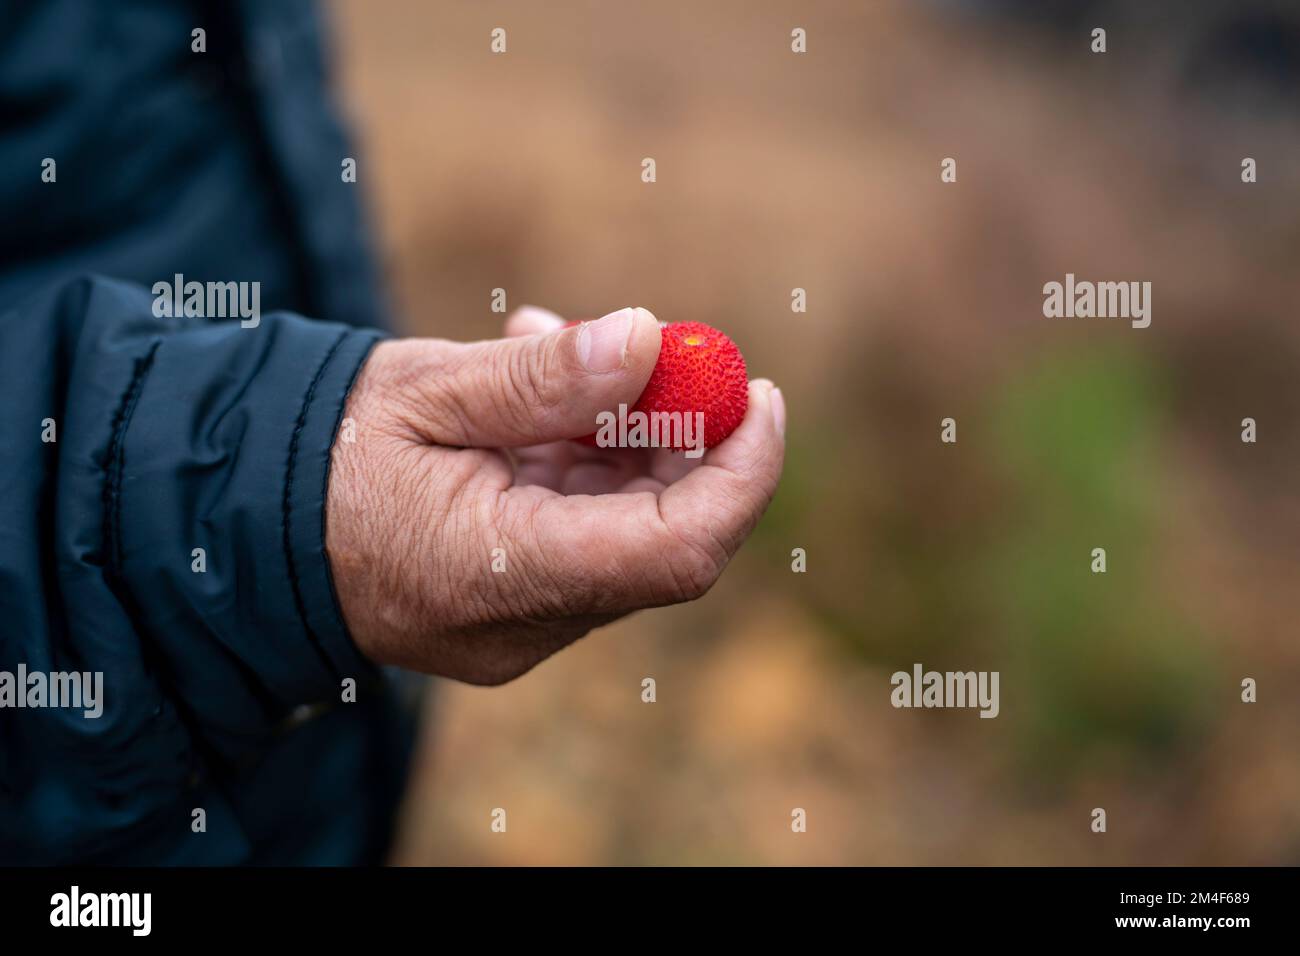 Man holding arbutus berries Stock Photo